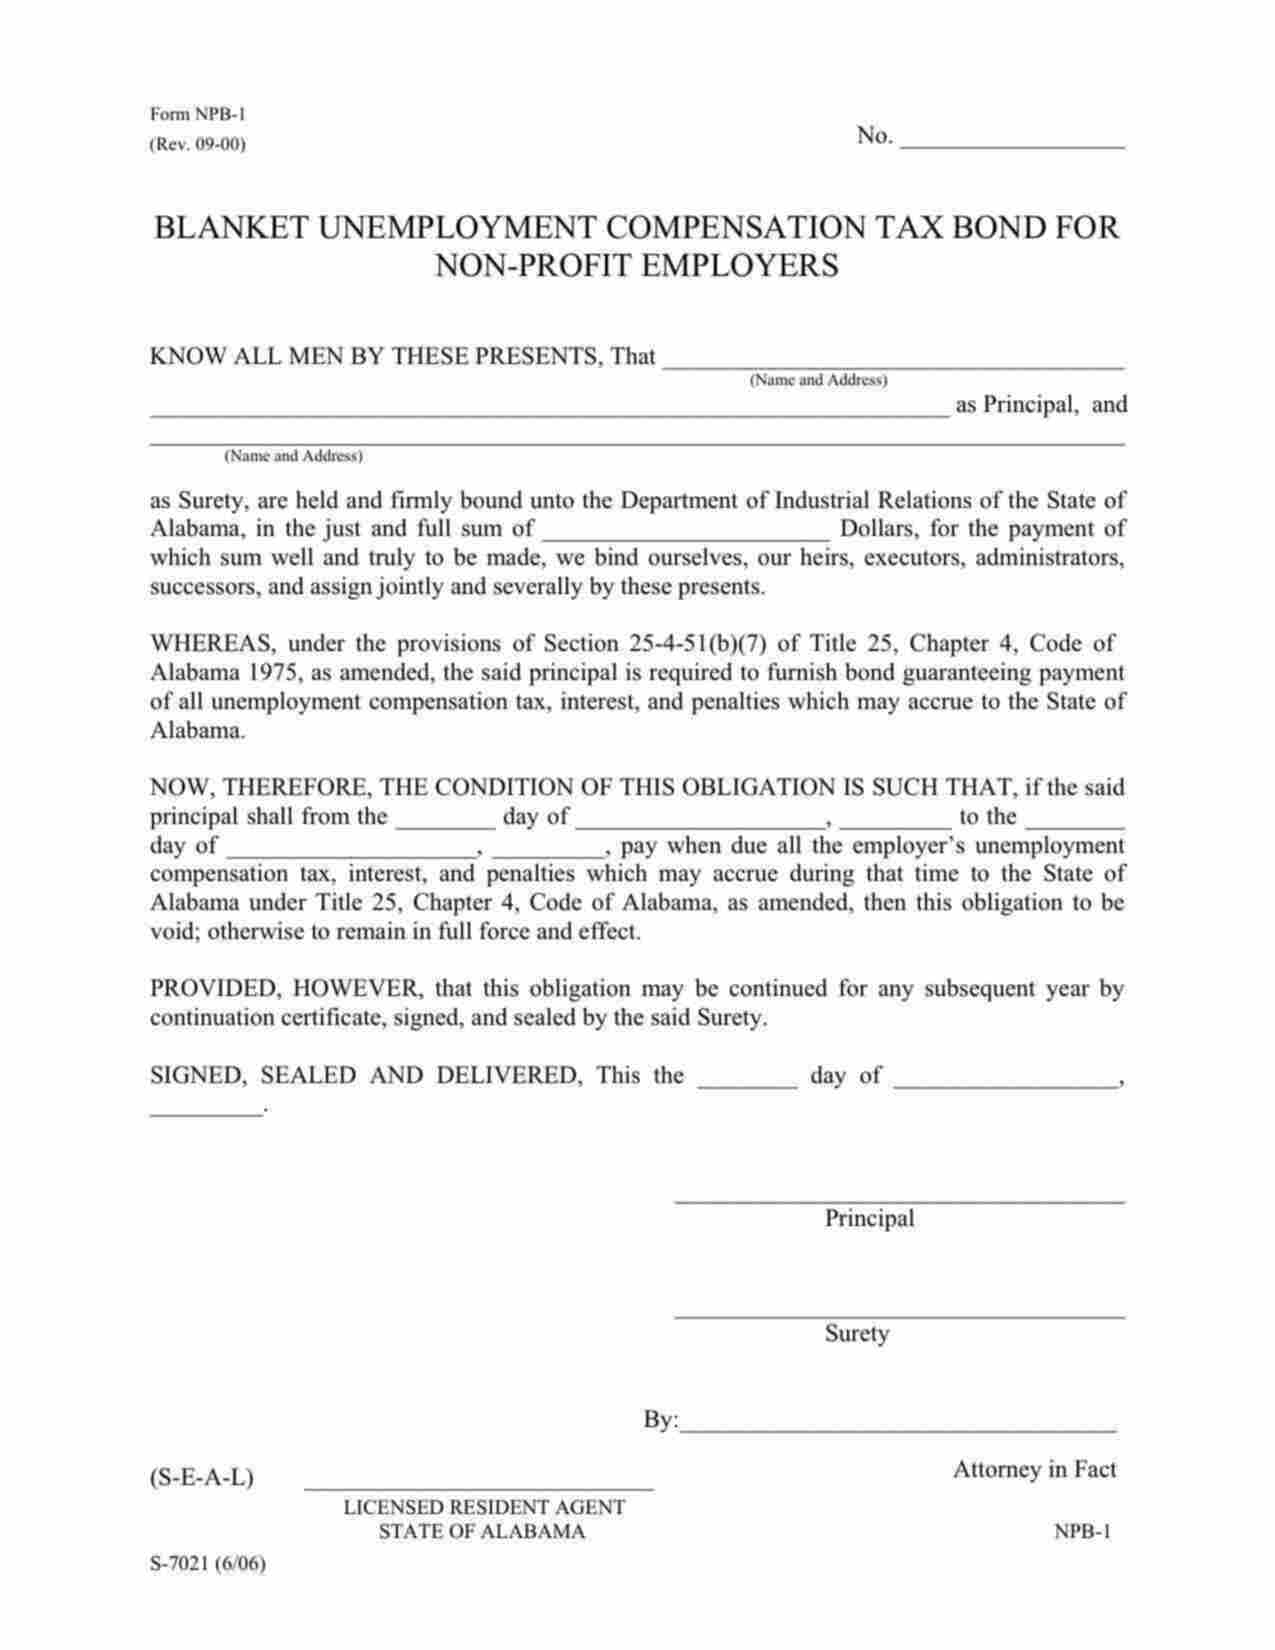 Alabama Blanket Unemployment Compensation Tax Bond Form